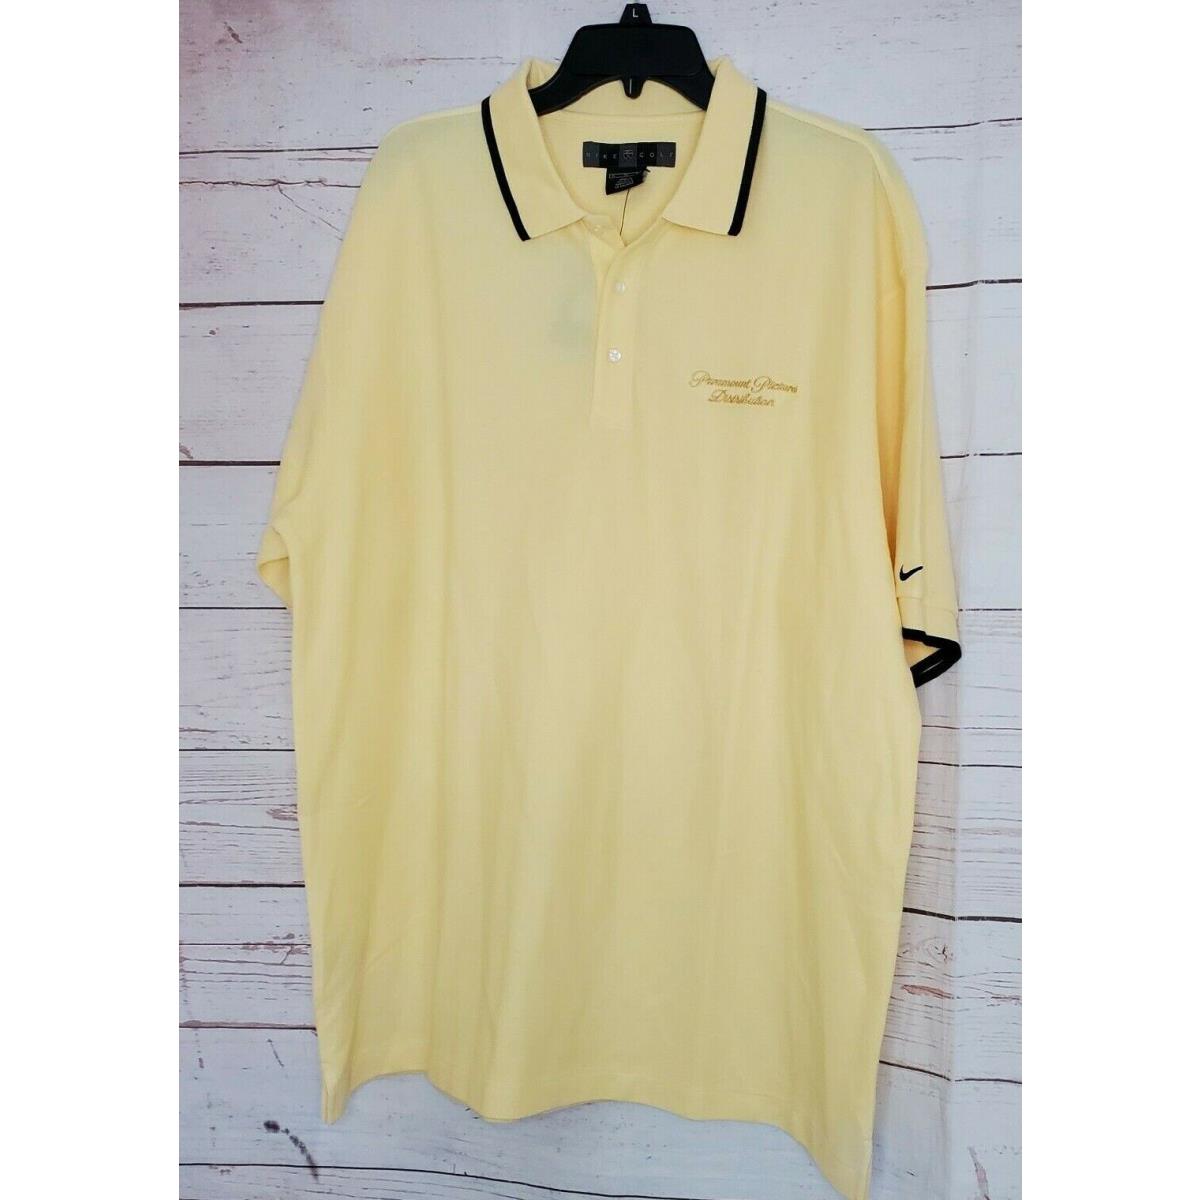 Paramount Pictures Distribution Custom Nike Golf XL Yellow Black Shirt